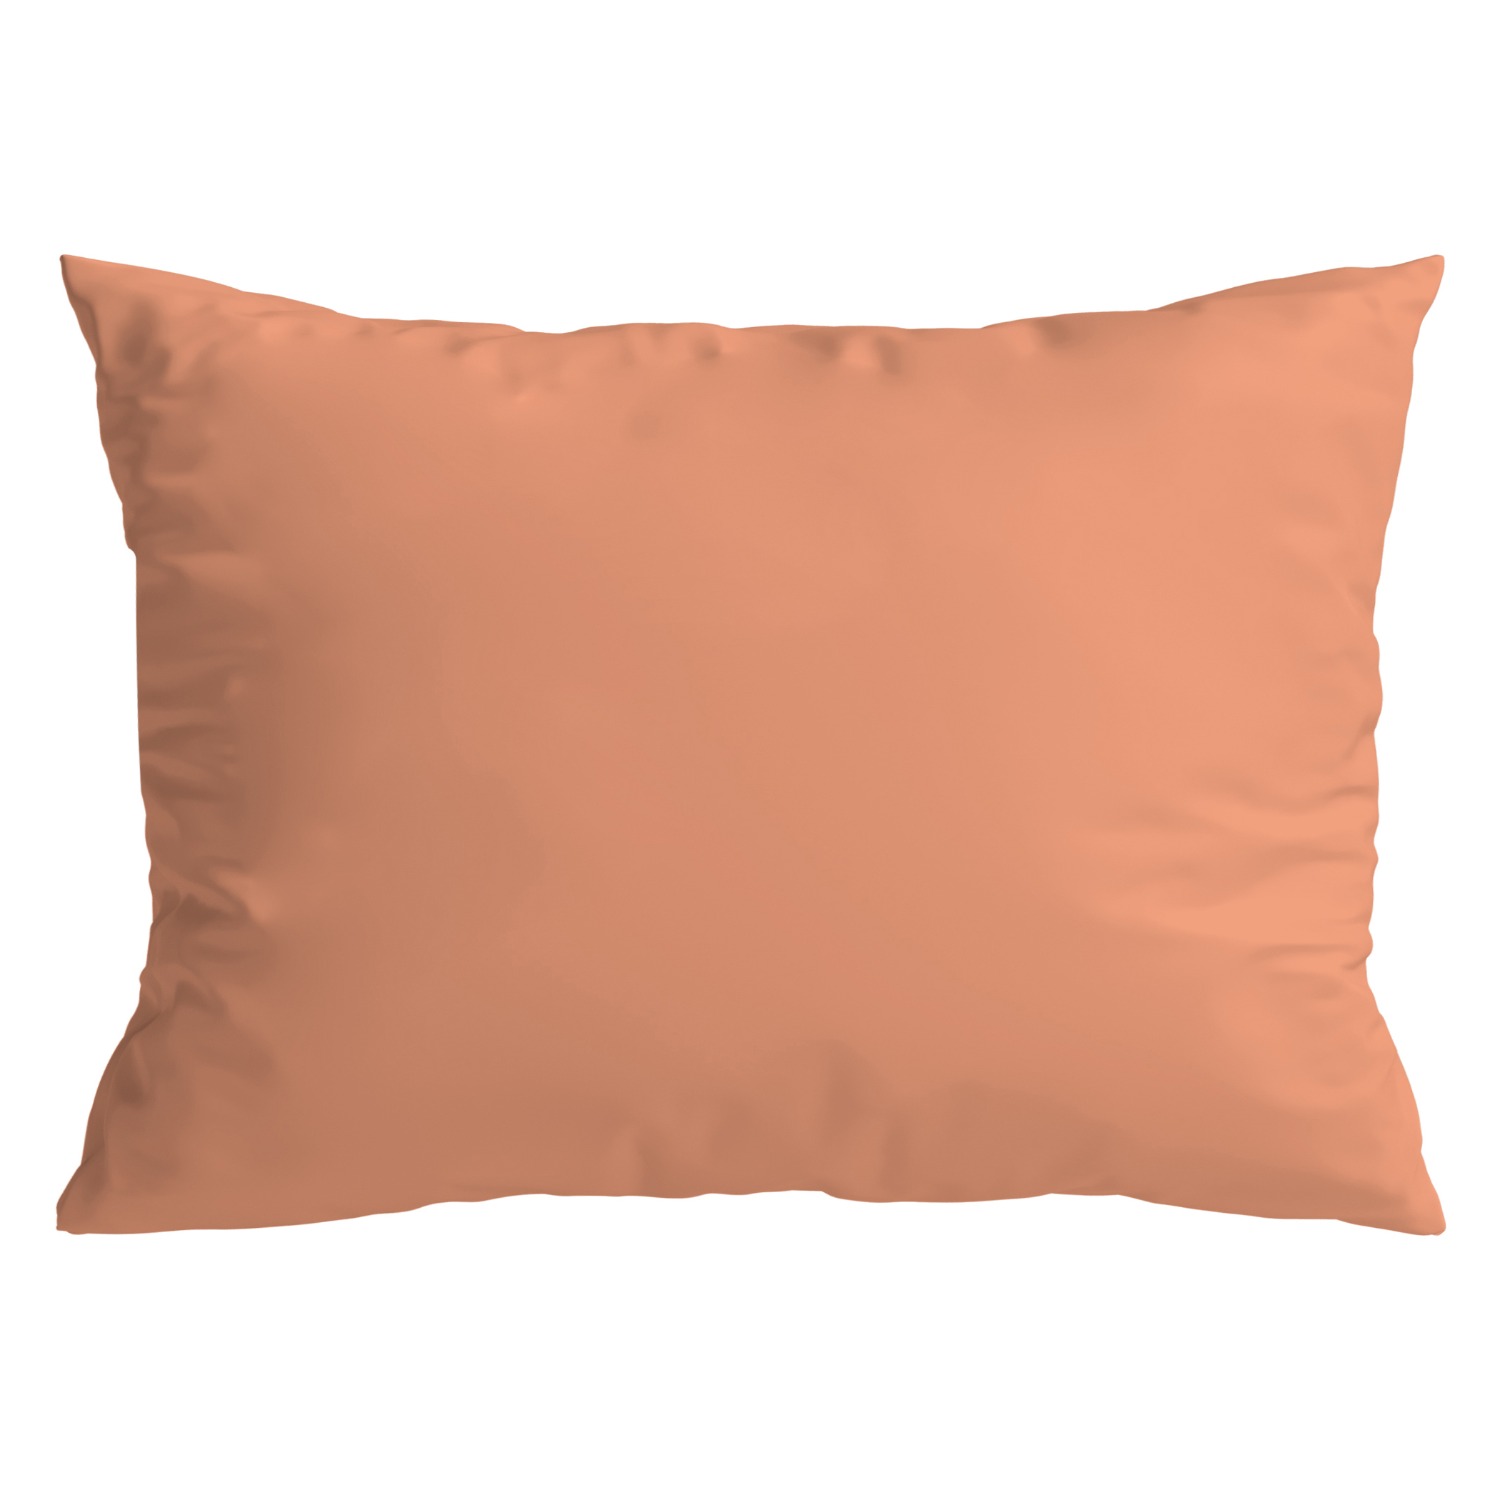 [a.o.b] Oatmeal pillow cover